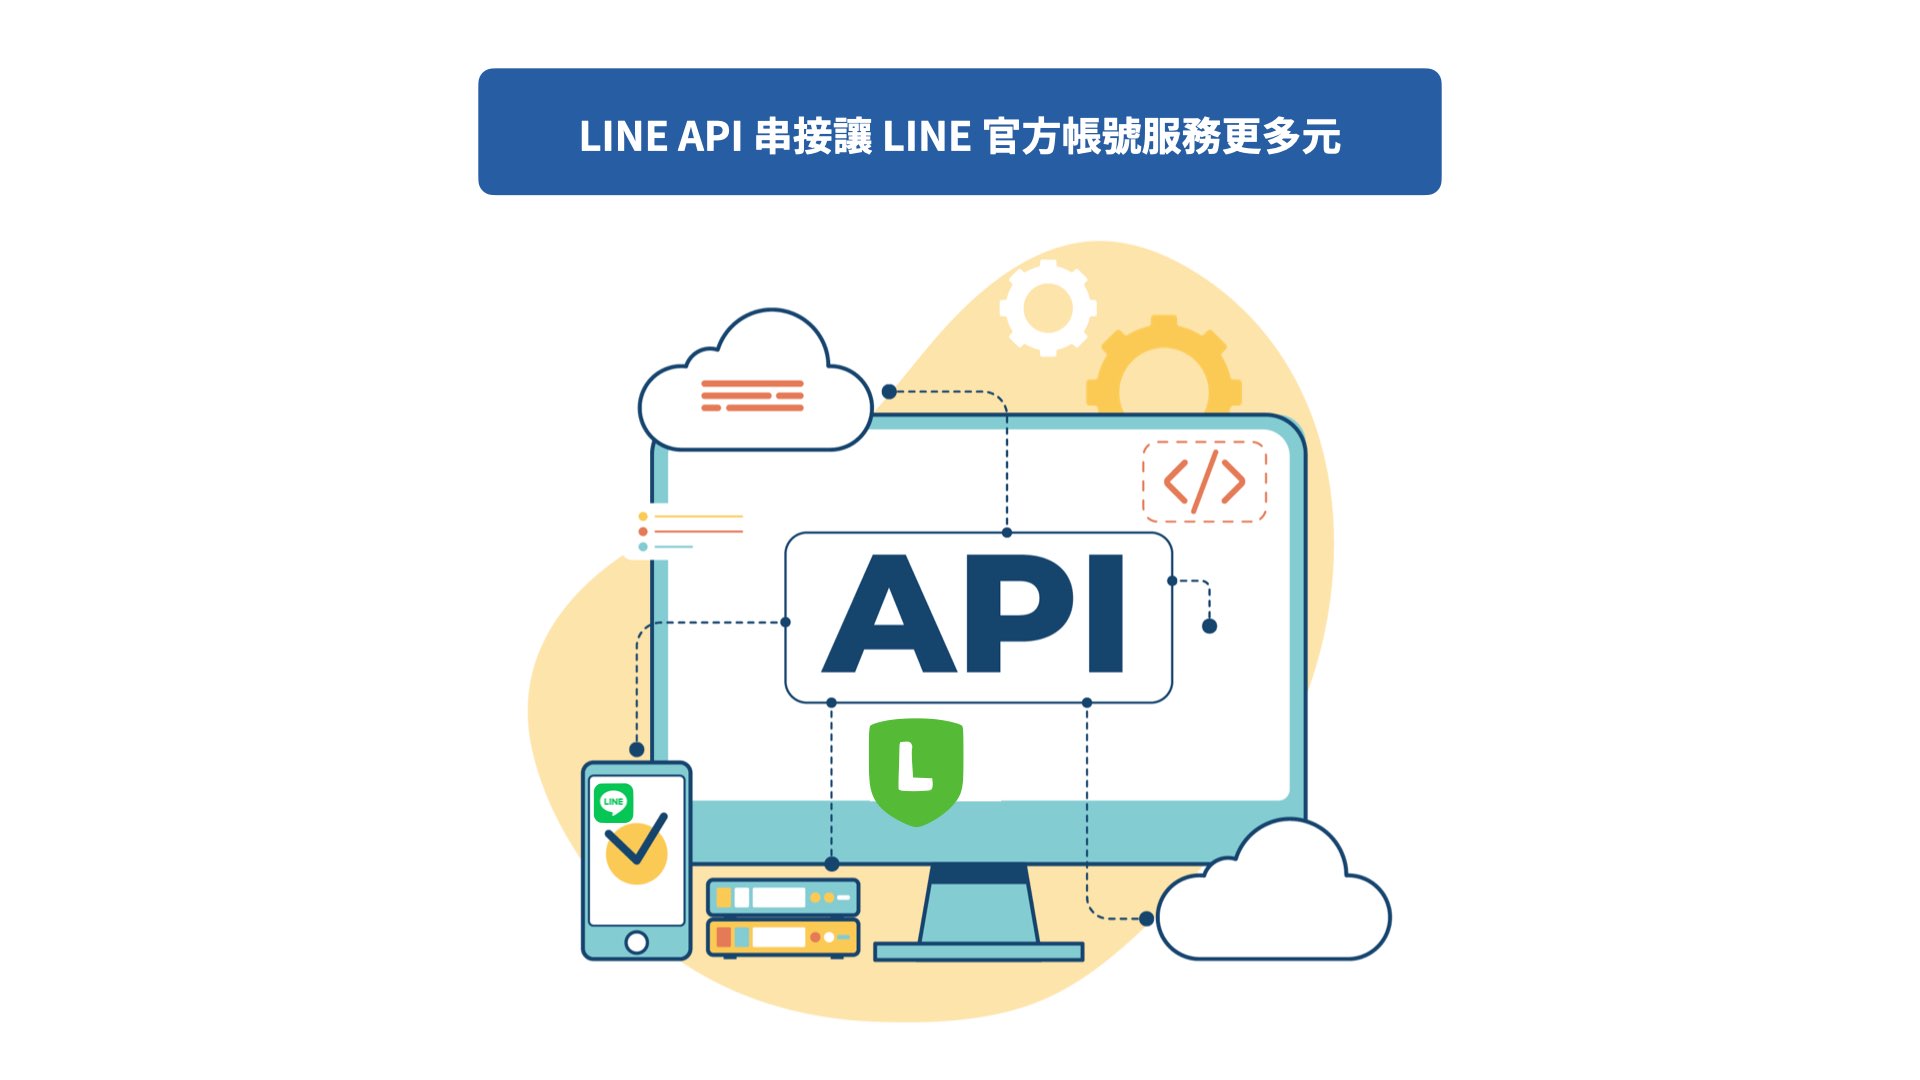 LINE API 串接讓 LINE 官方帳號服務更多元